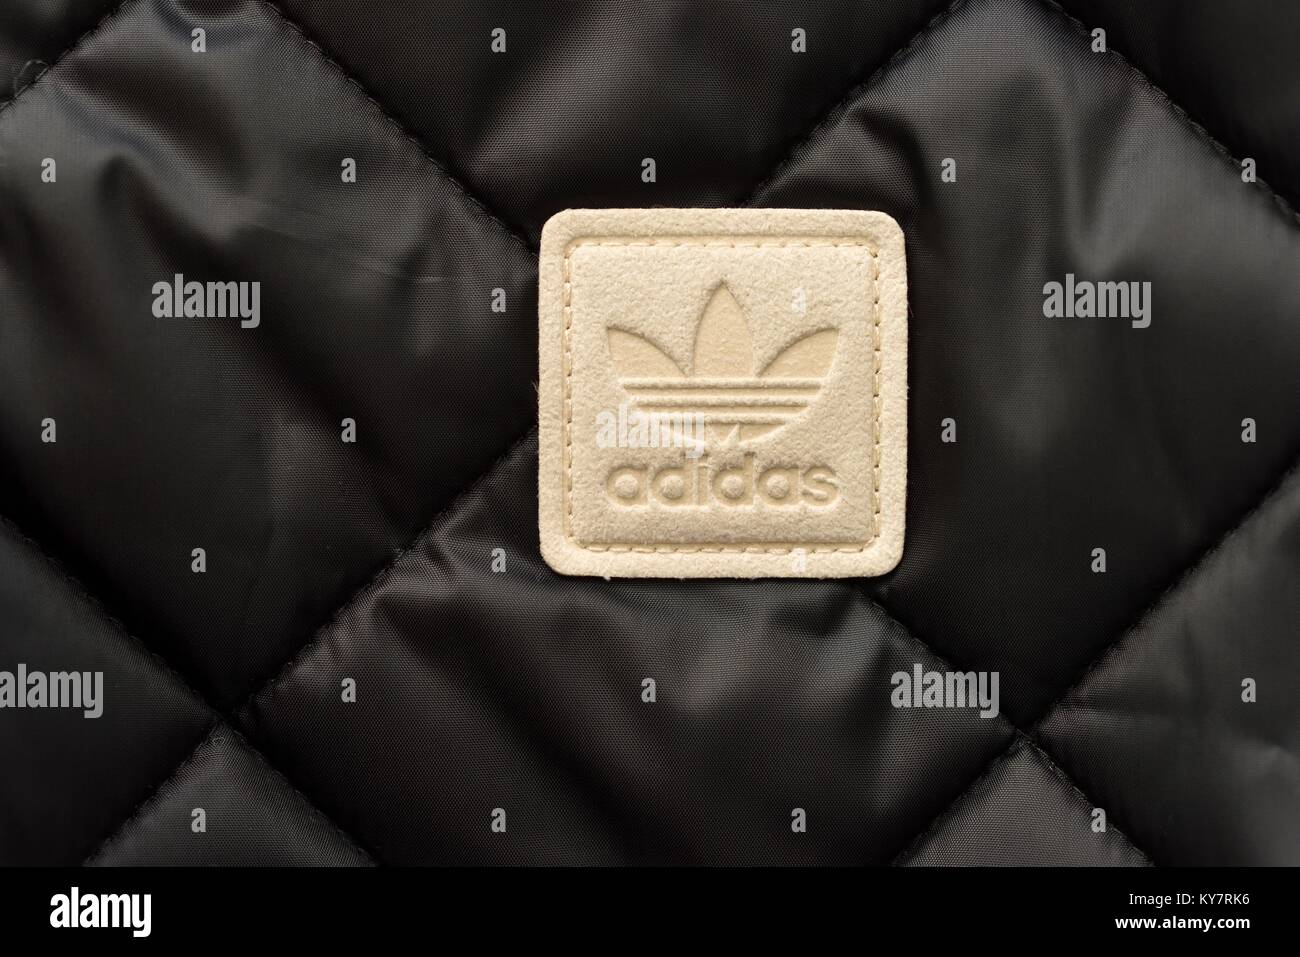 Adidas clothing brand Stock Photo